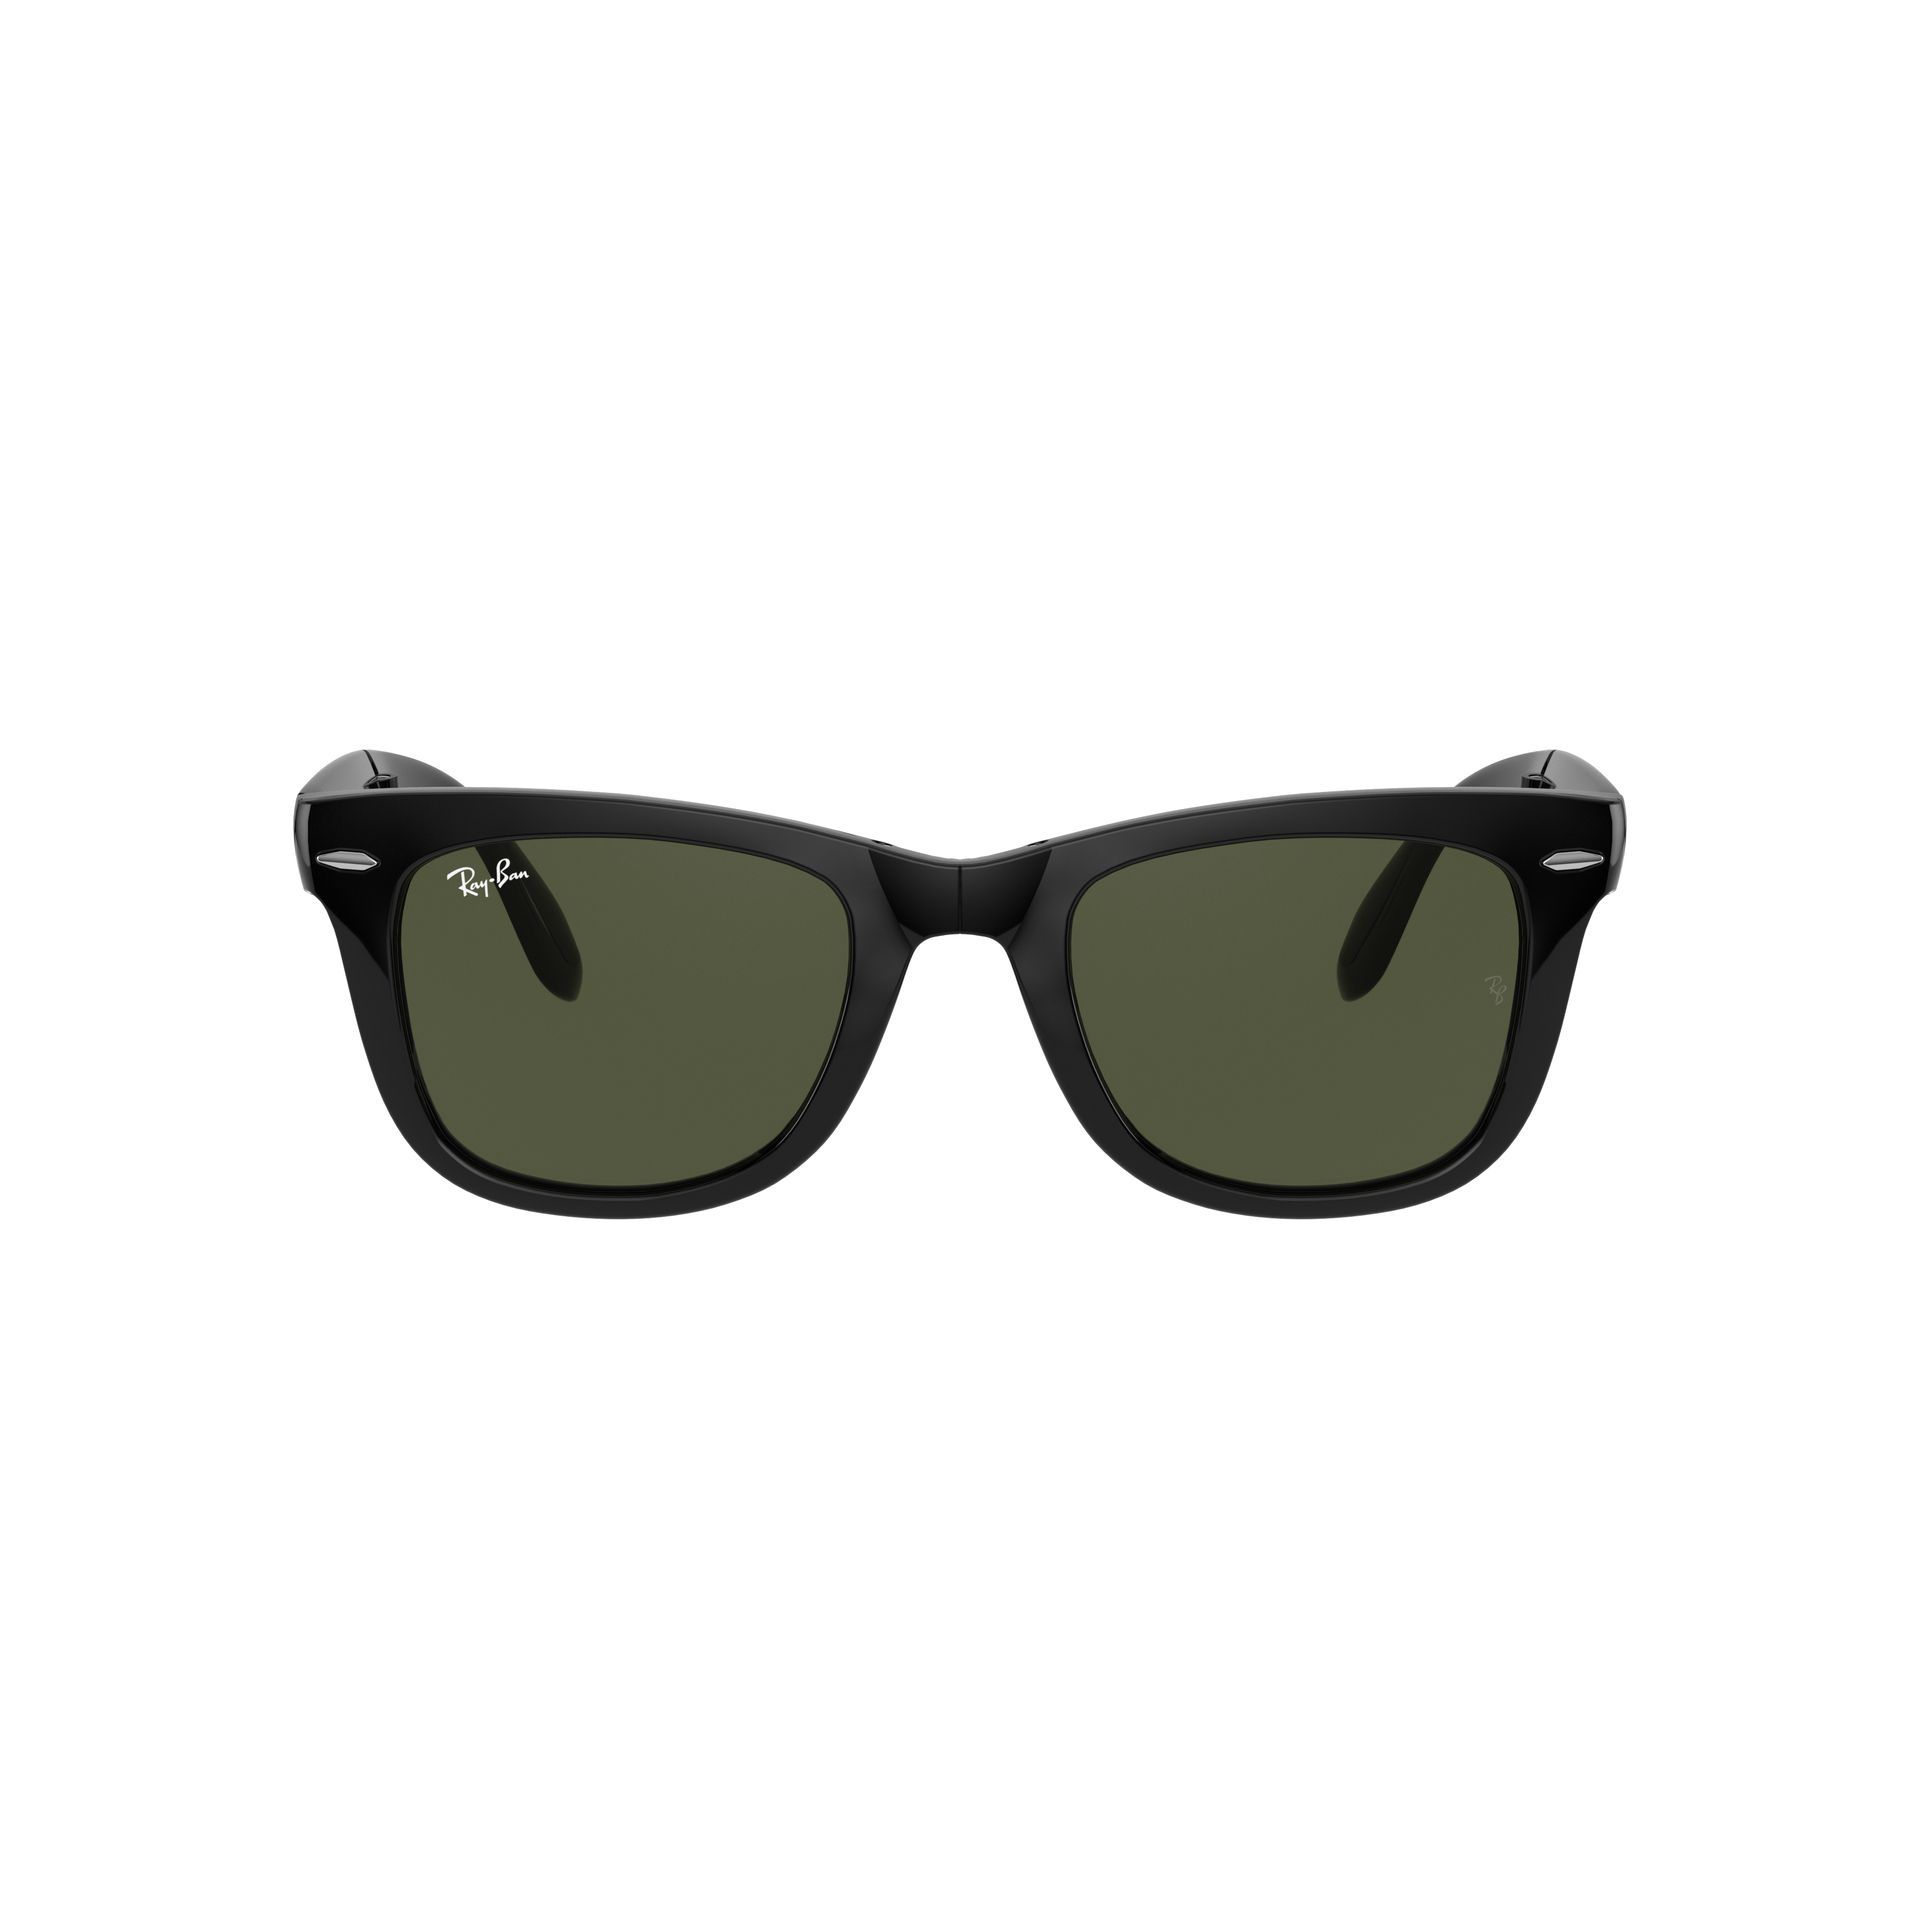 0RB4105 Square Sunglasses 601 - size 50